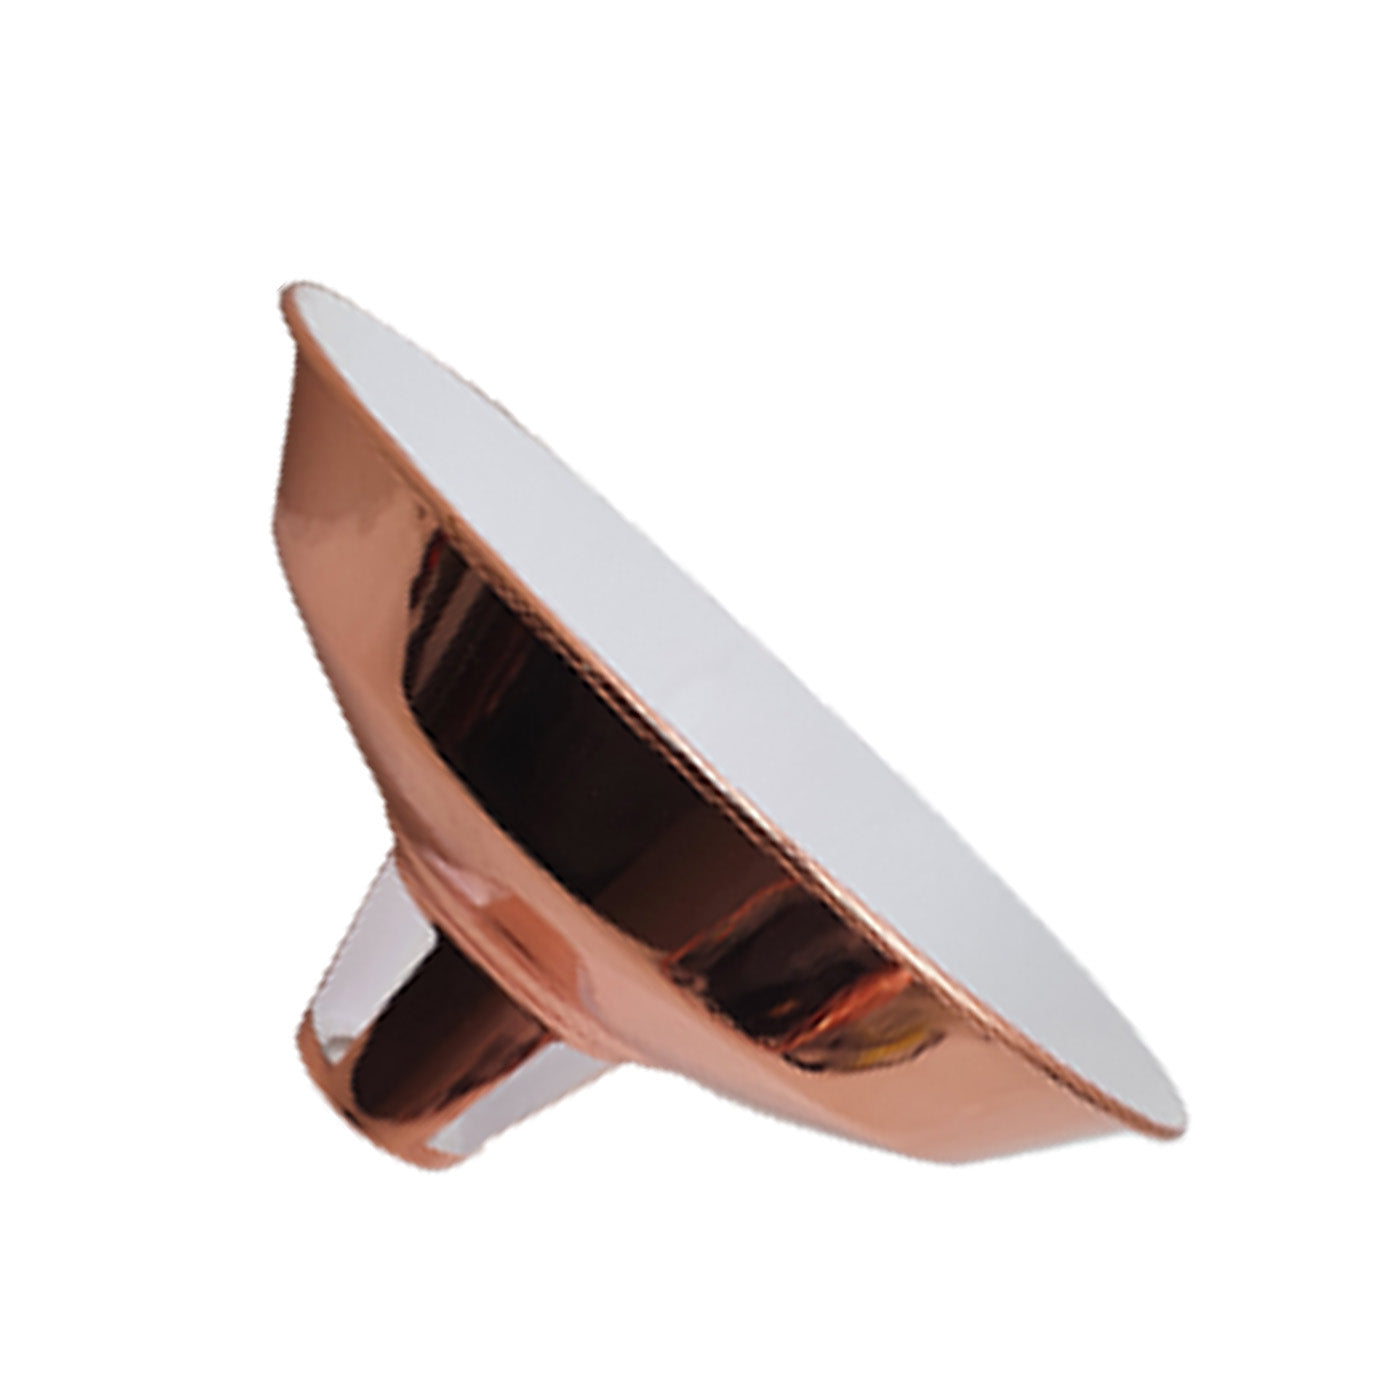 Retro Style Light Shades Modern Ceiling Pendant Lampshades Metal - Rose Gold~2324 - LEDSone UK Ltd